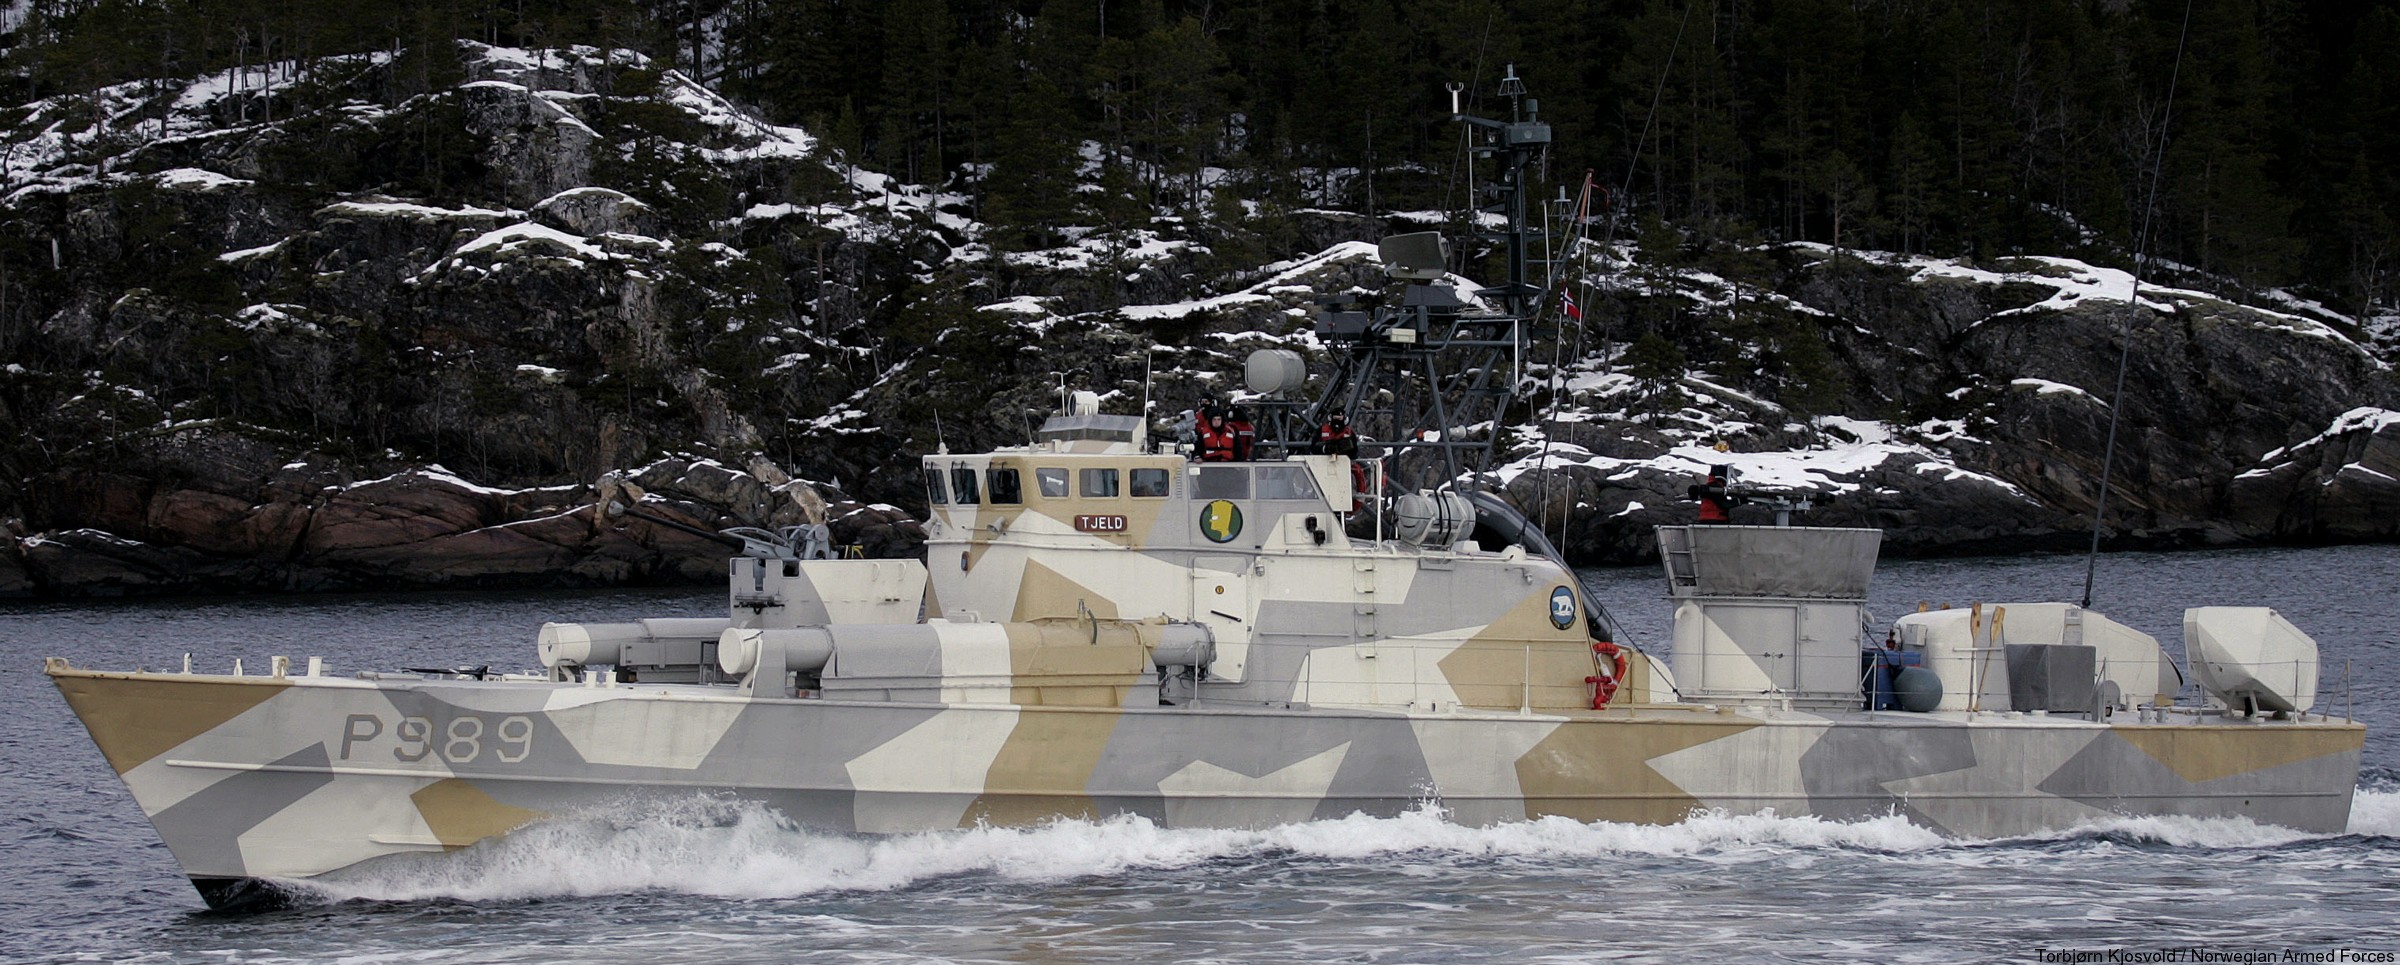 p-989 knm tjeld hauk class fast attack missile torpedo craft boat norwegian navy sjøforsvaret 09